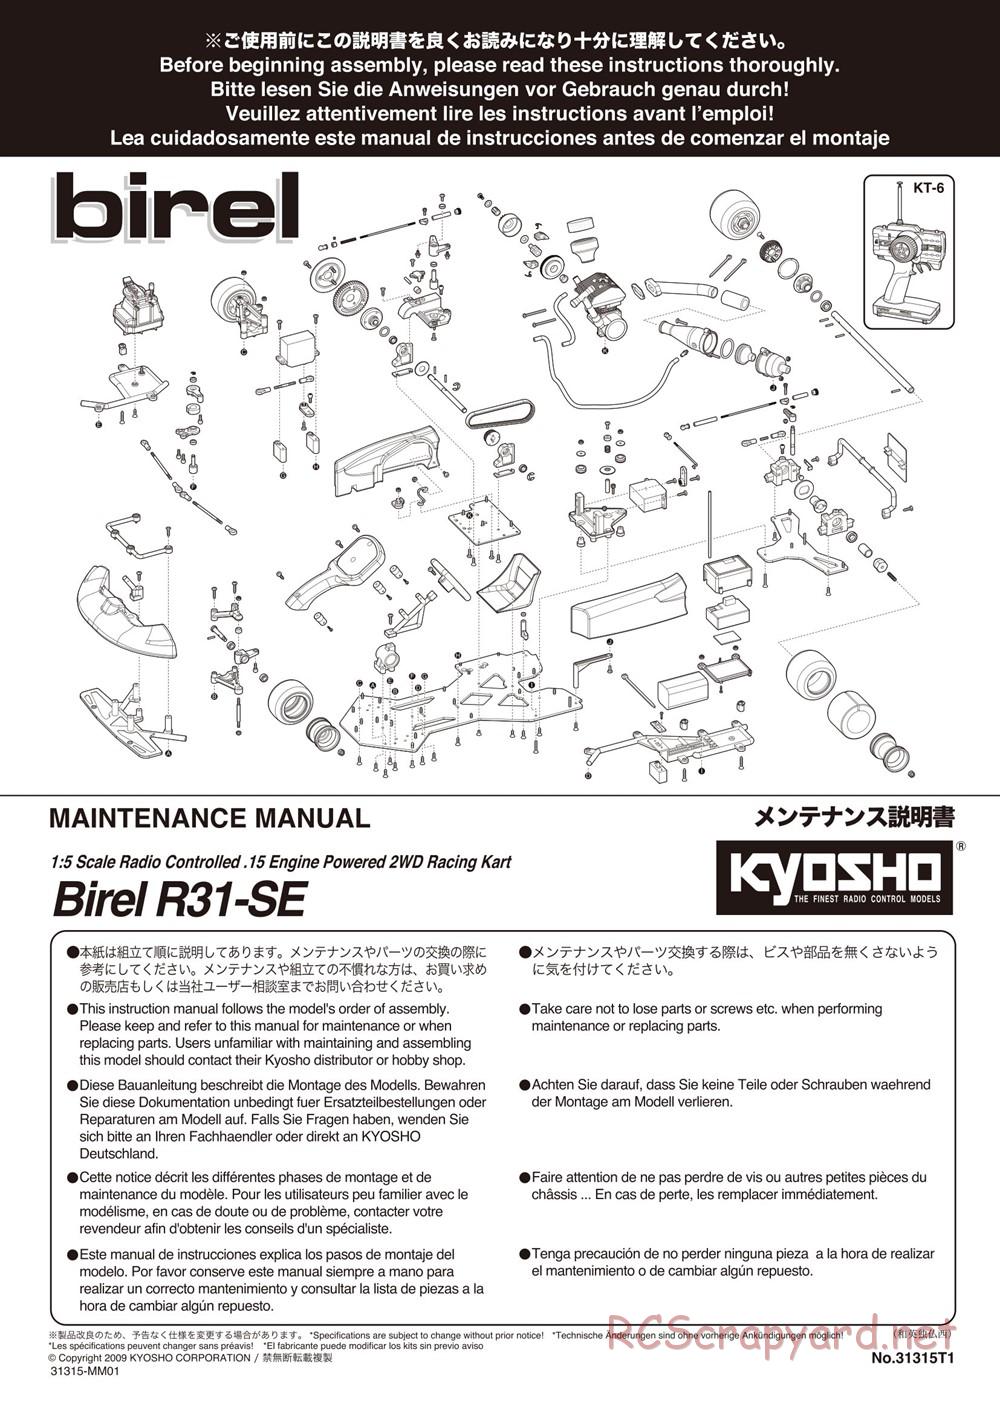 Kyosho - Birel R31-SE Kart - Manual - Page 1